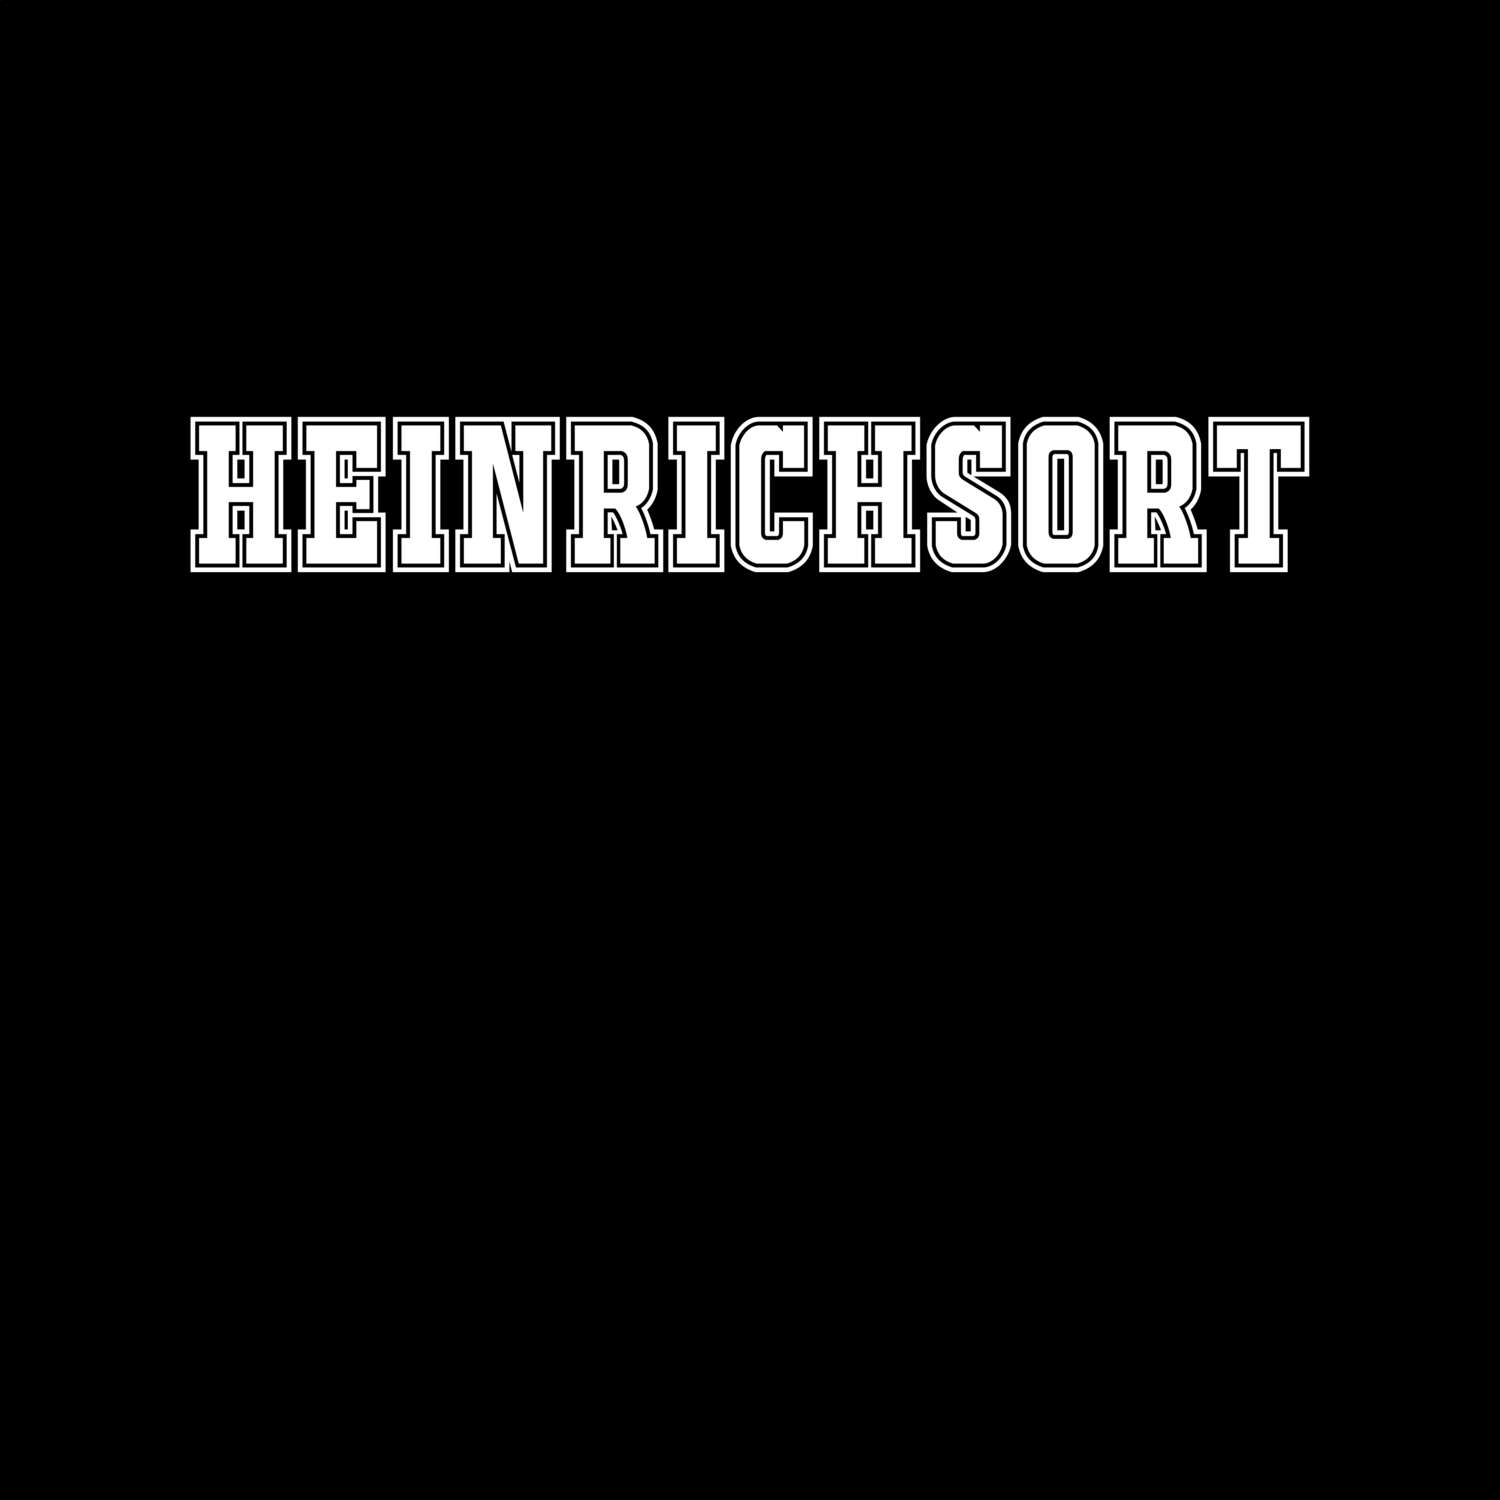 Heinrichsort T-Shirt »Classic«